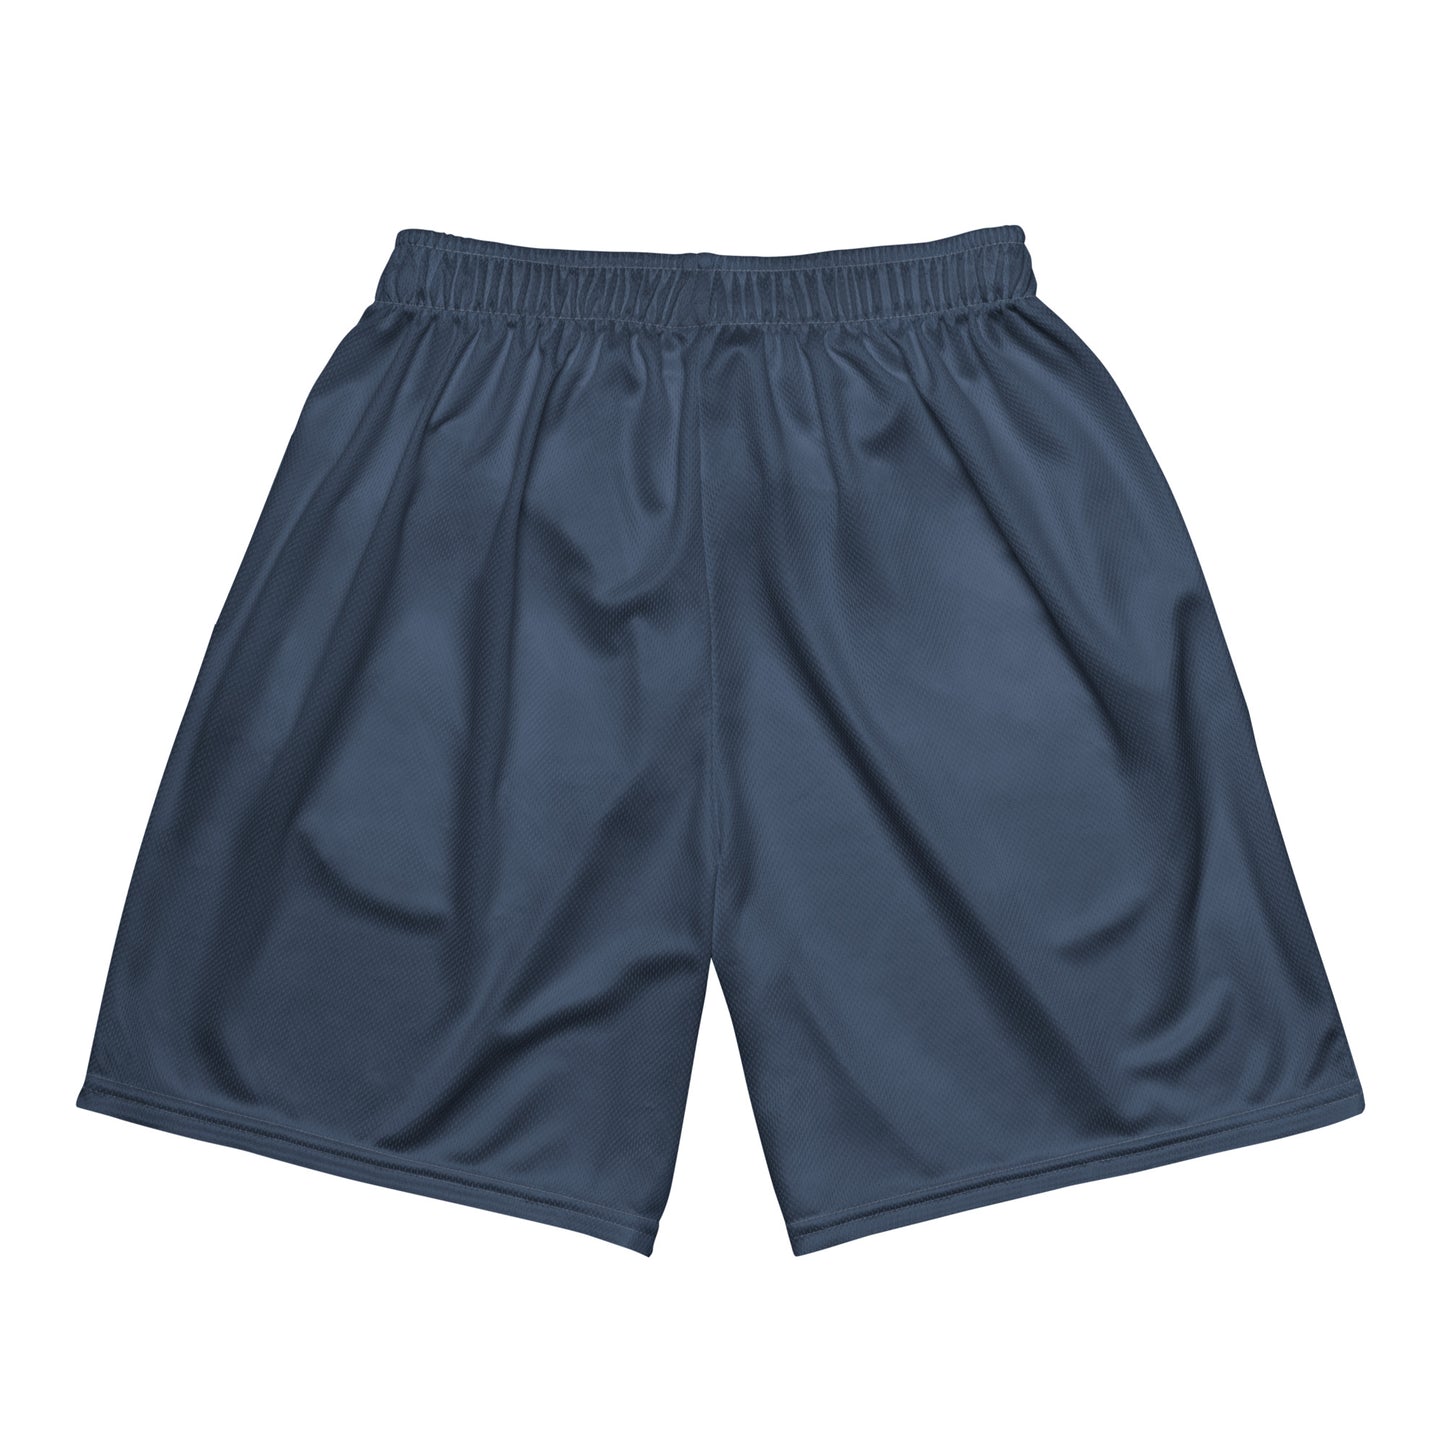 REHH - Mesh Shorts (Navy)